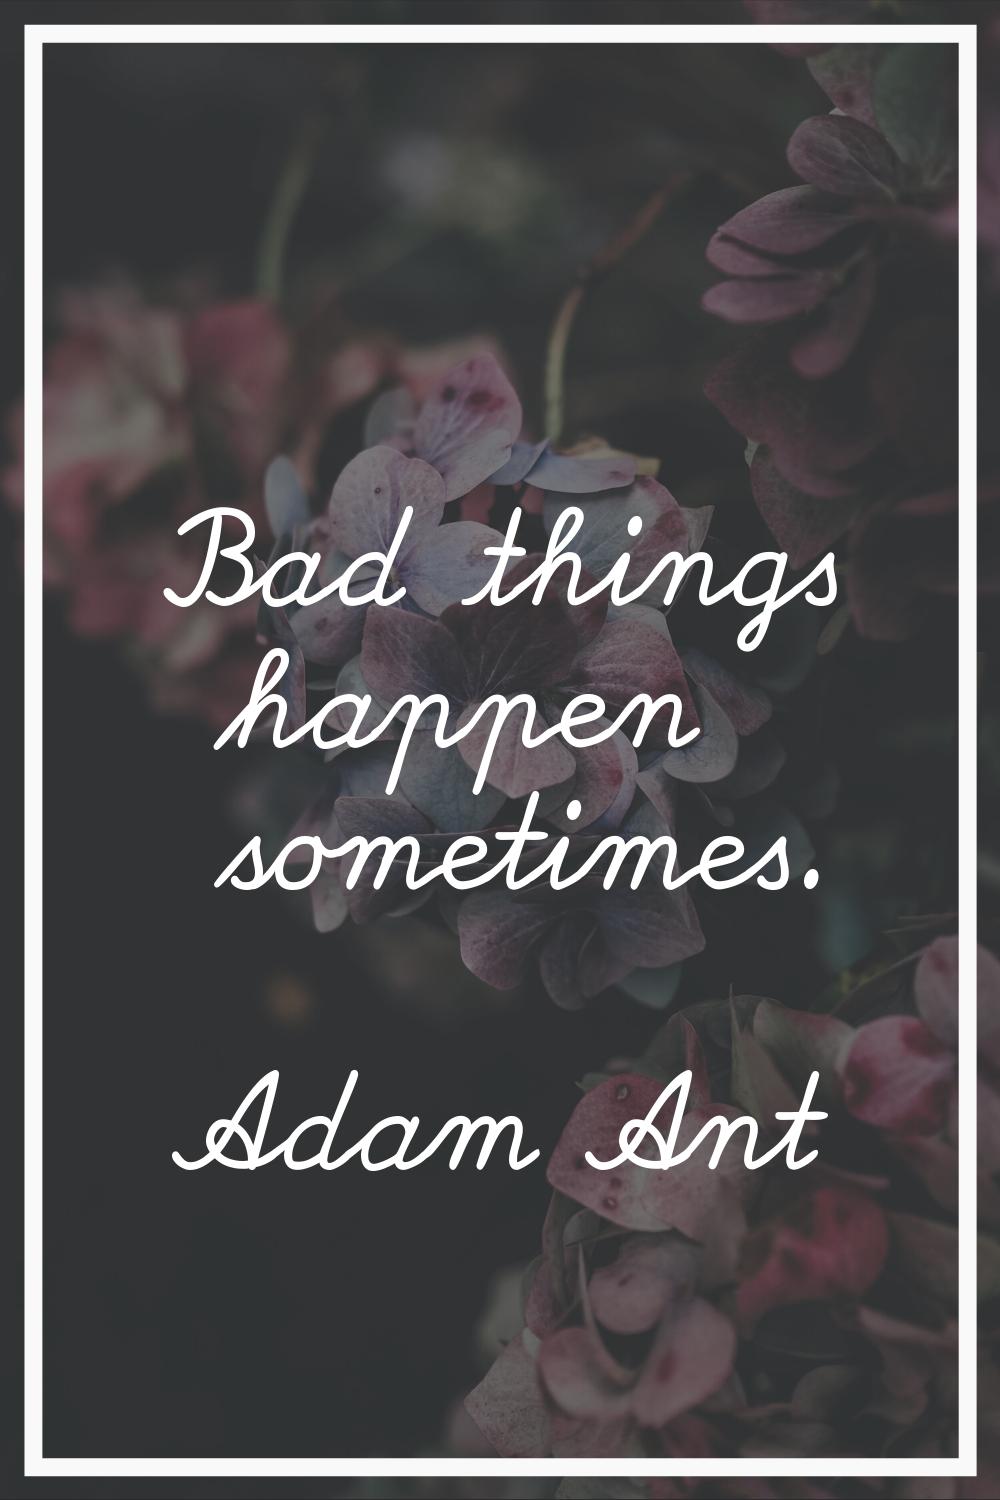 Bad things happen sometimes.